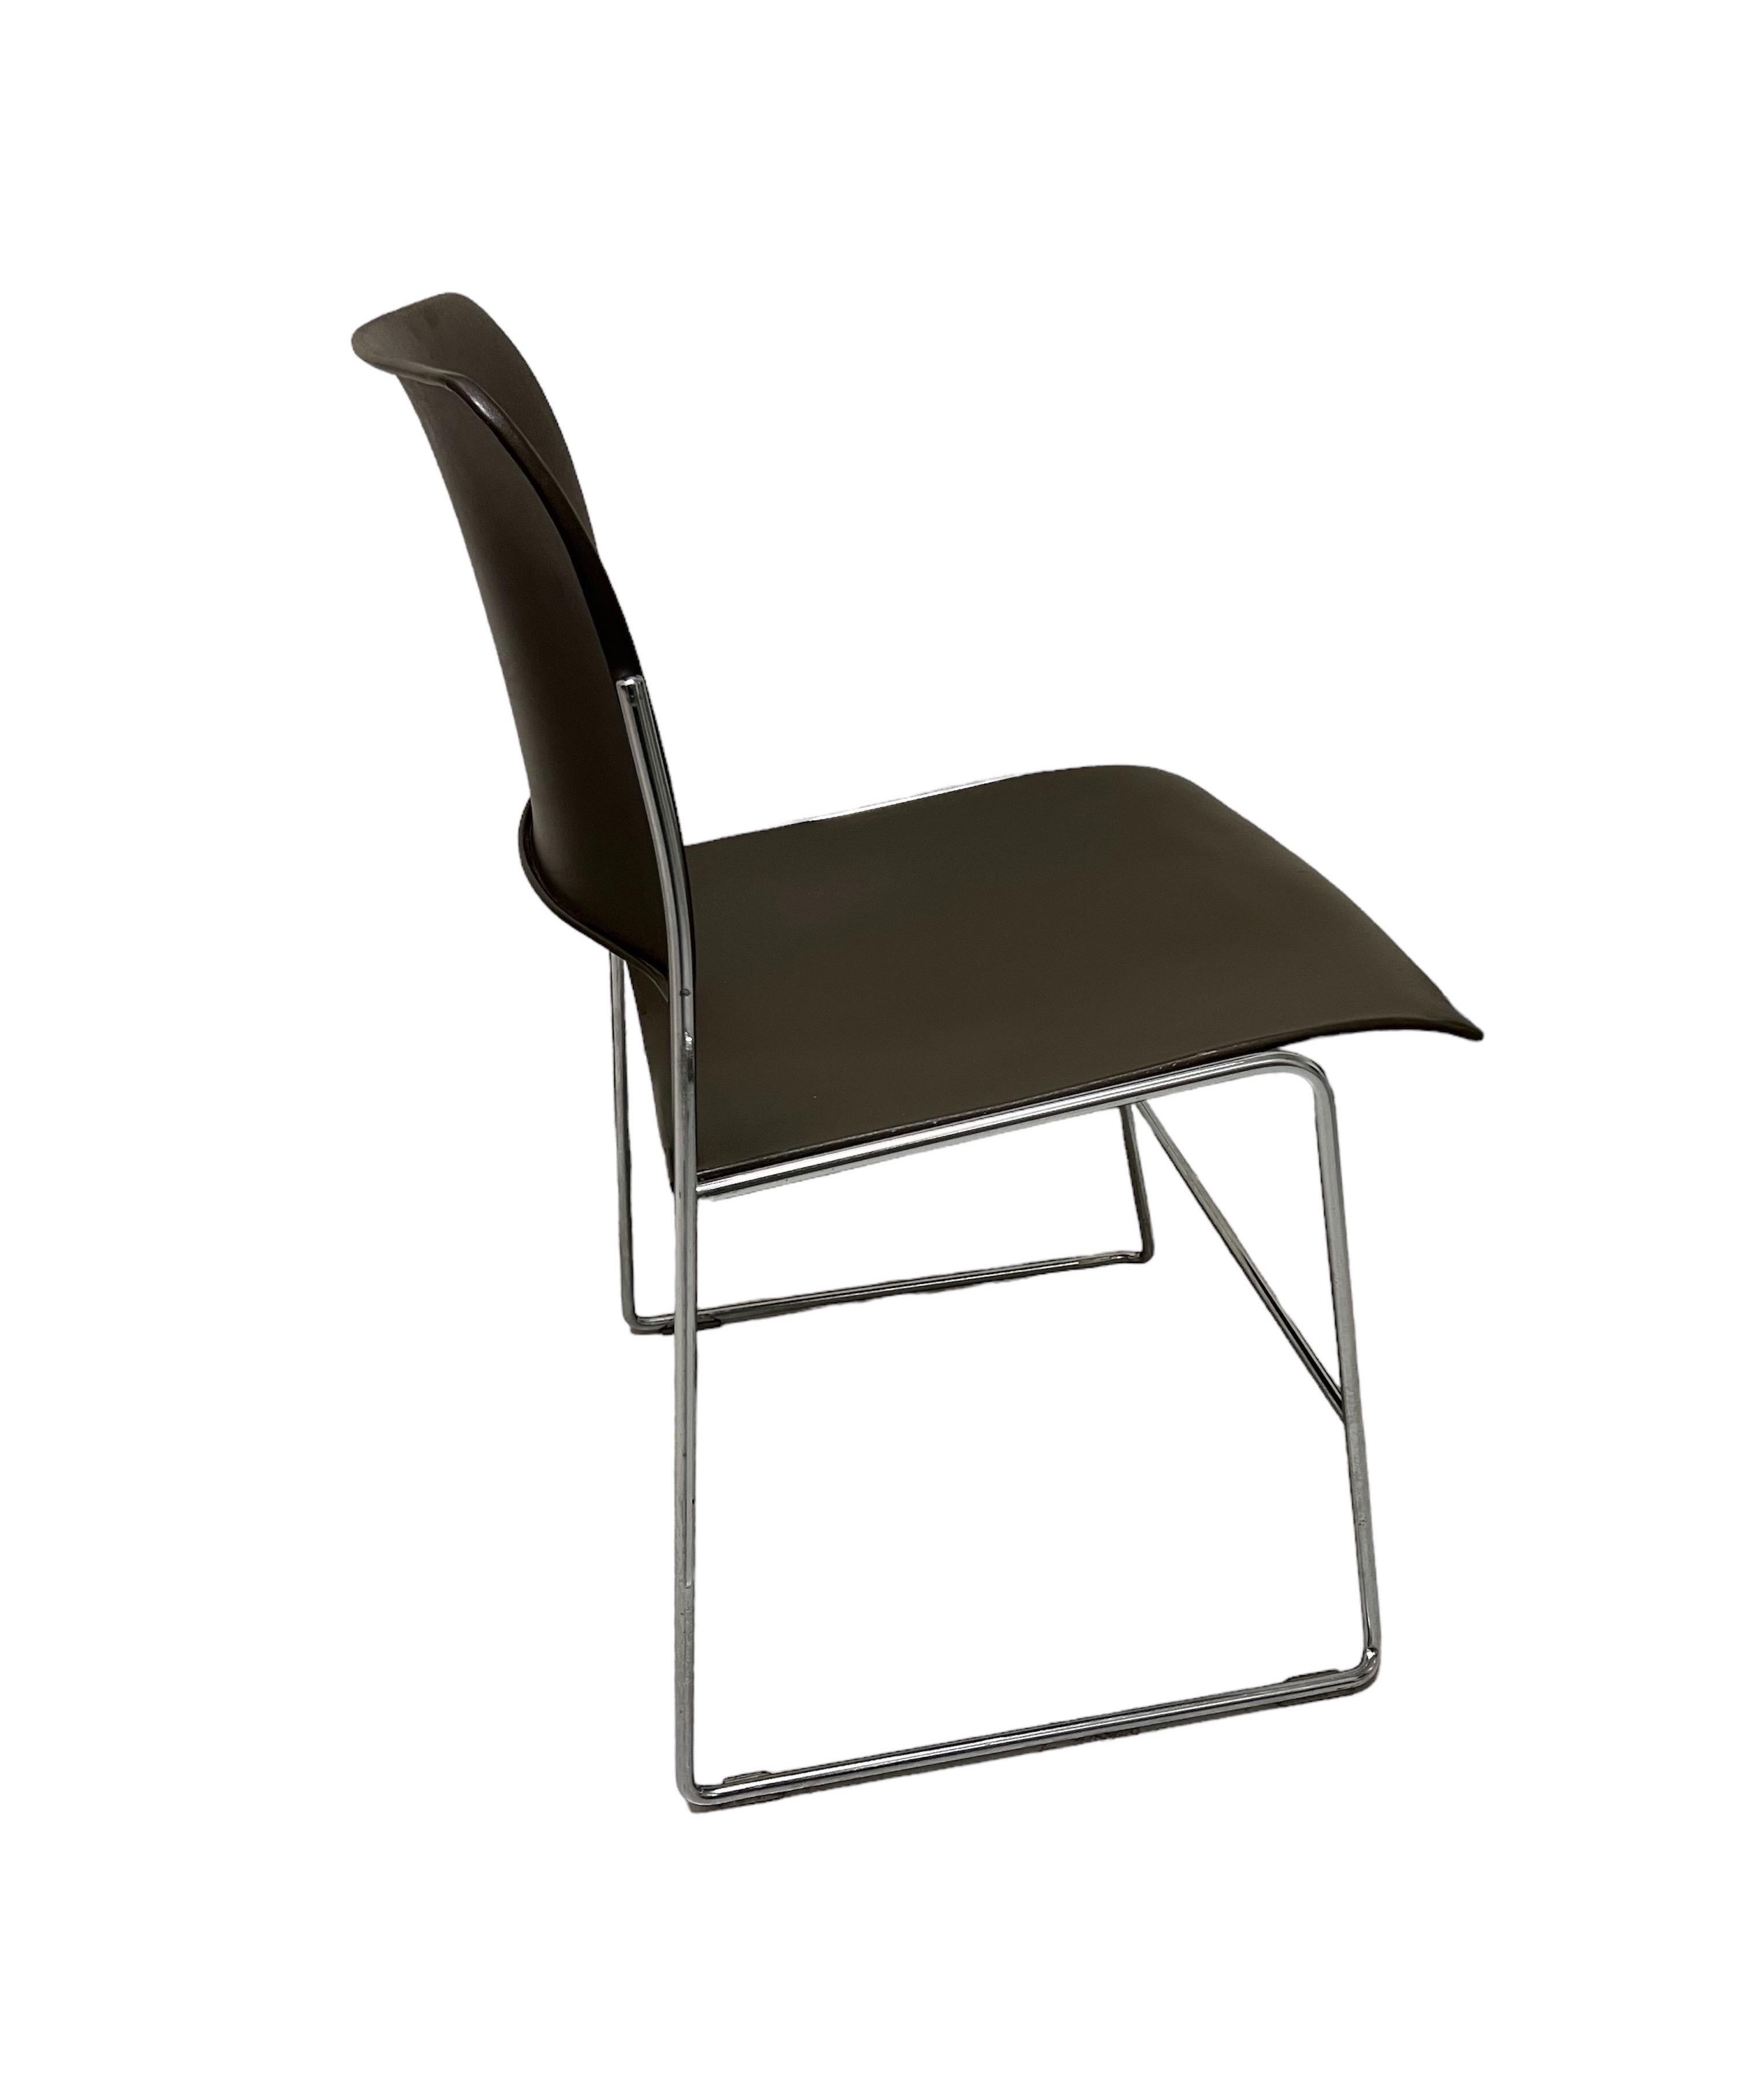 david rowland 40/4 chair price